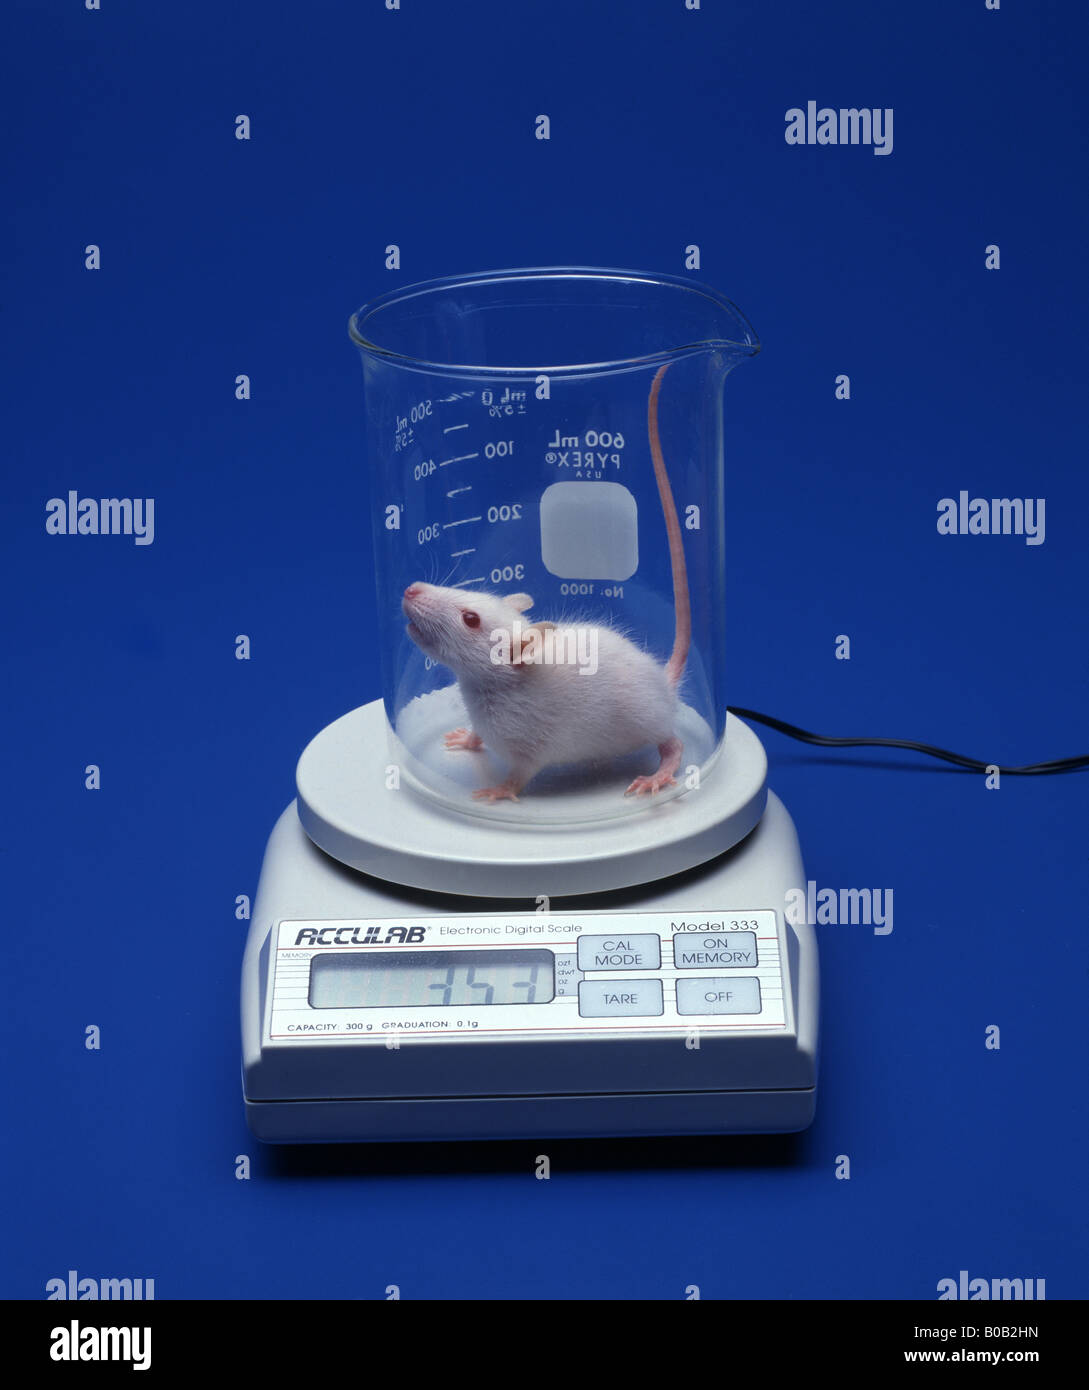 DIETARY RAT IN BEAKER ON ELECTRONIC DIGITAL SCALE Stock Photo